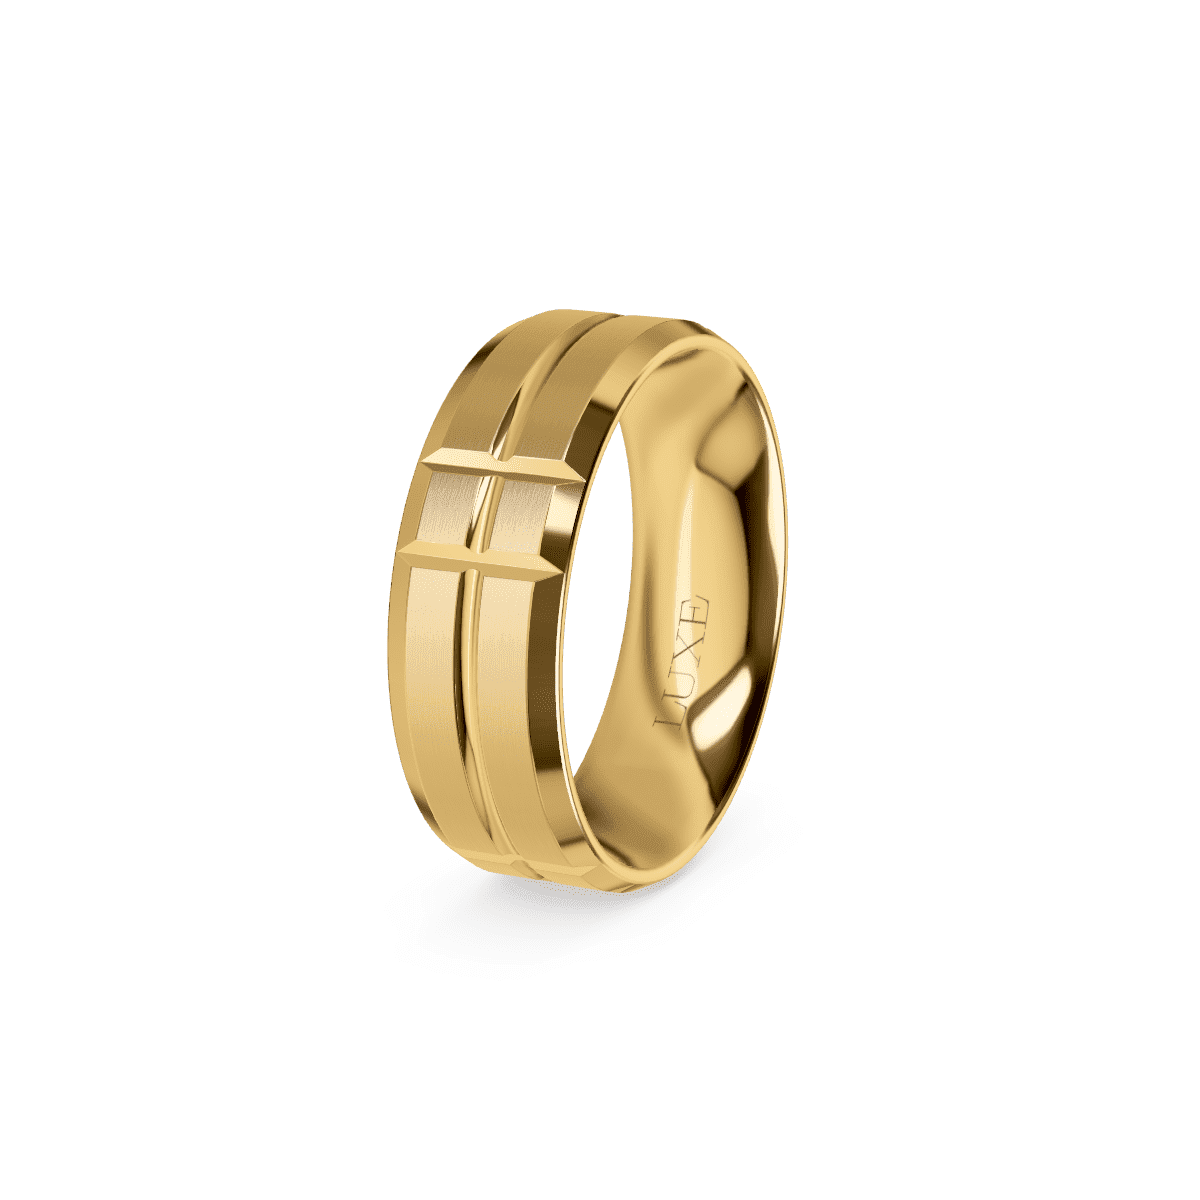 ALAMO gold ring - Luxe Wedding Rings